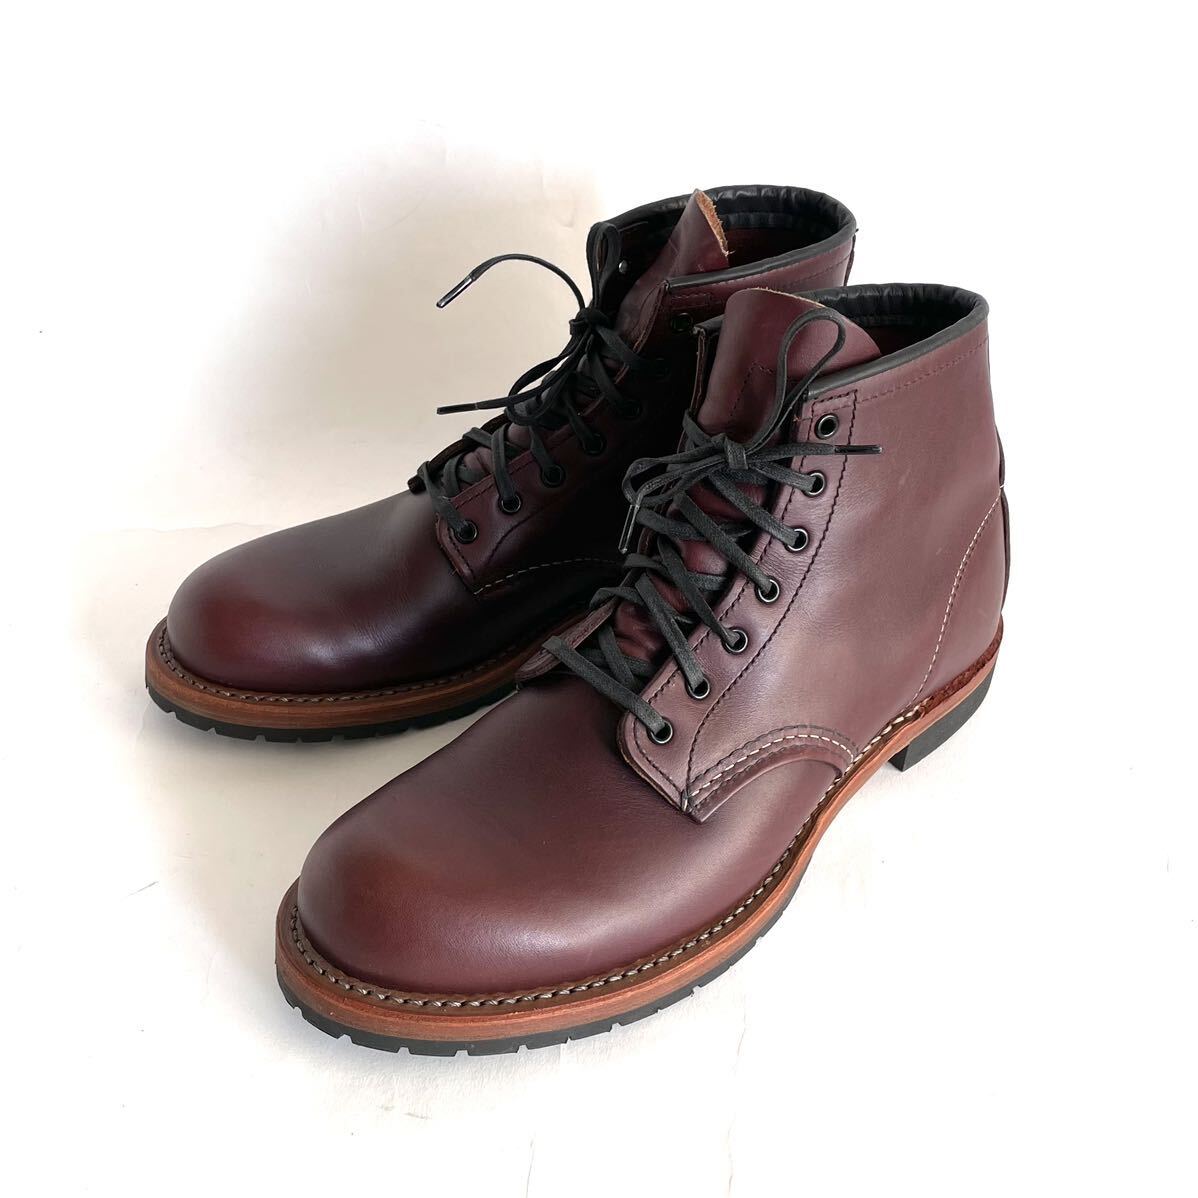  beautiful goods REDWING 9011 BECKMAN boots 9 1/2 D black cherry - Red Wing 27.5cm Beck man 